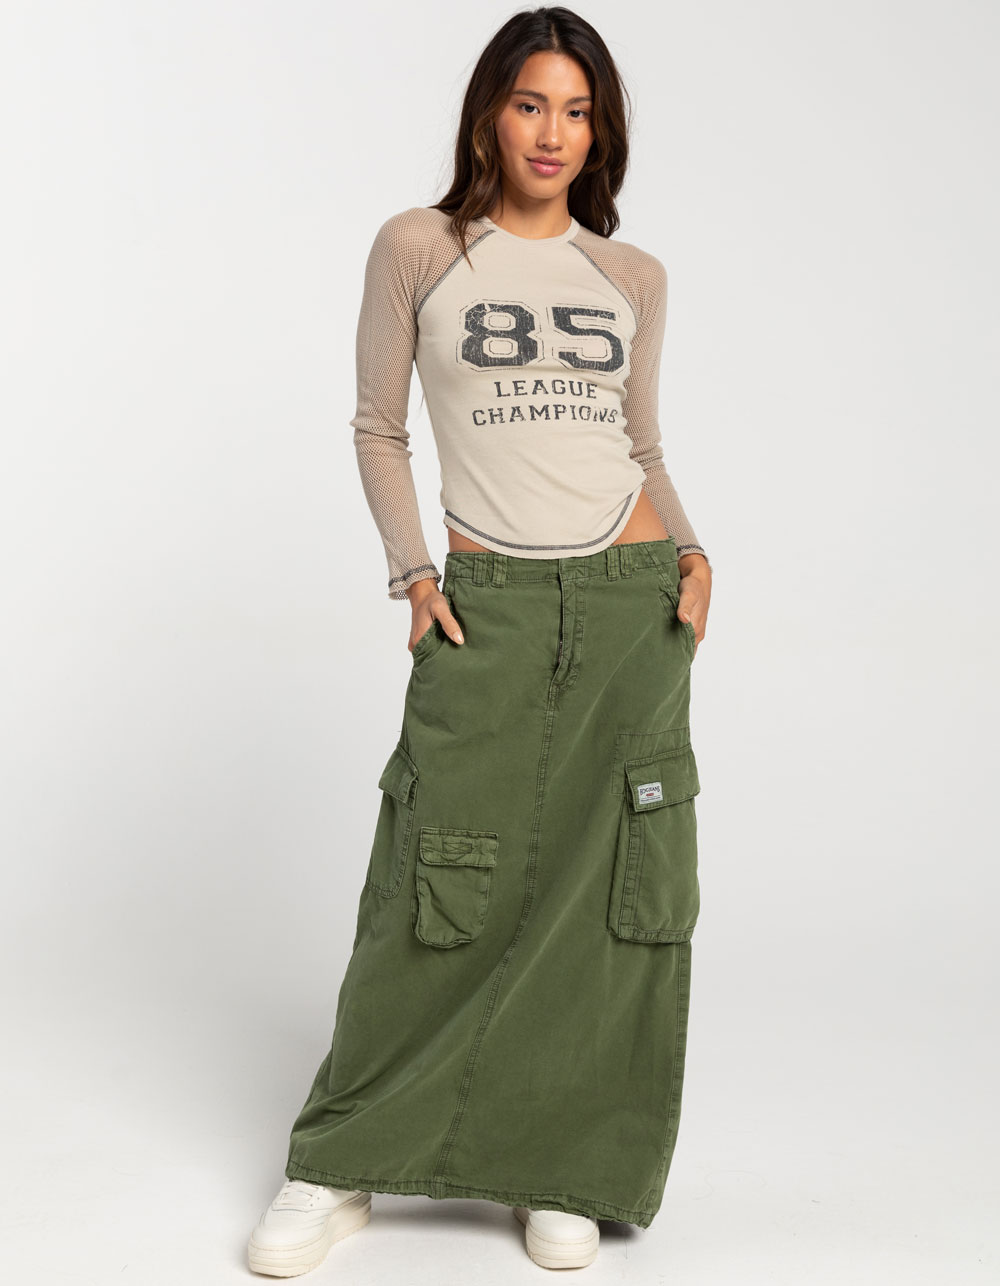 Airtex Tee STONE | BDG - Sleeve Womens 85 Long Raglan Urban Outfitters Tillys